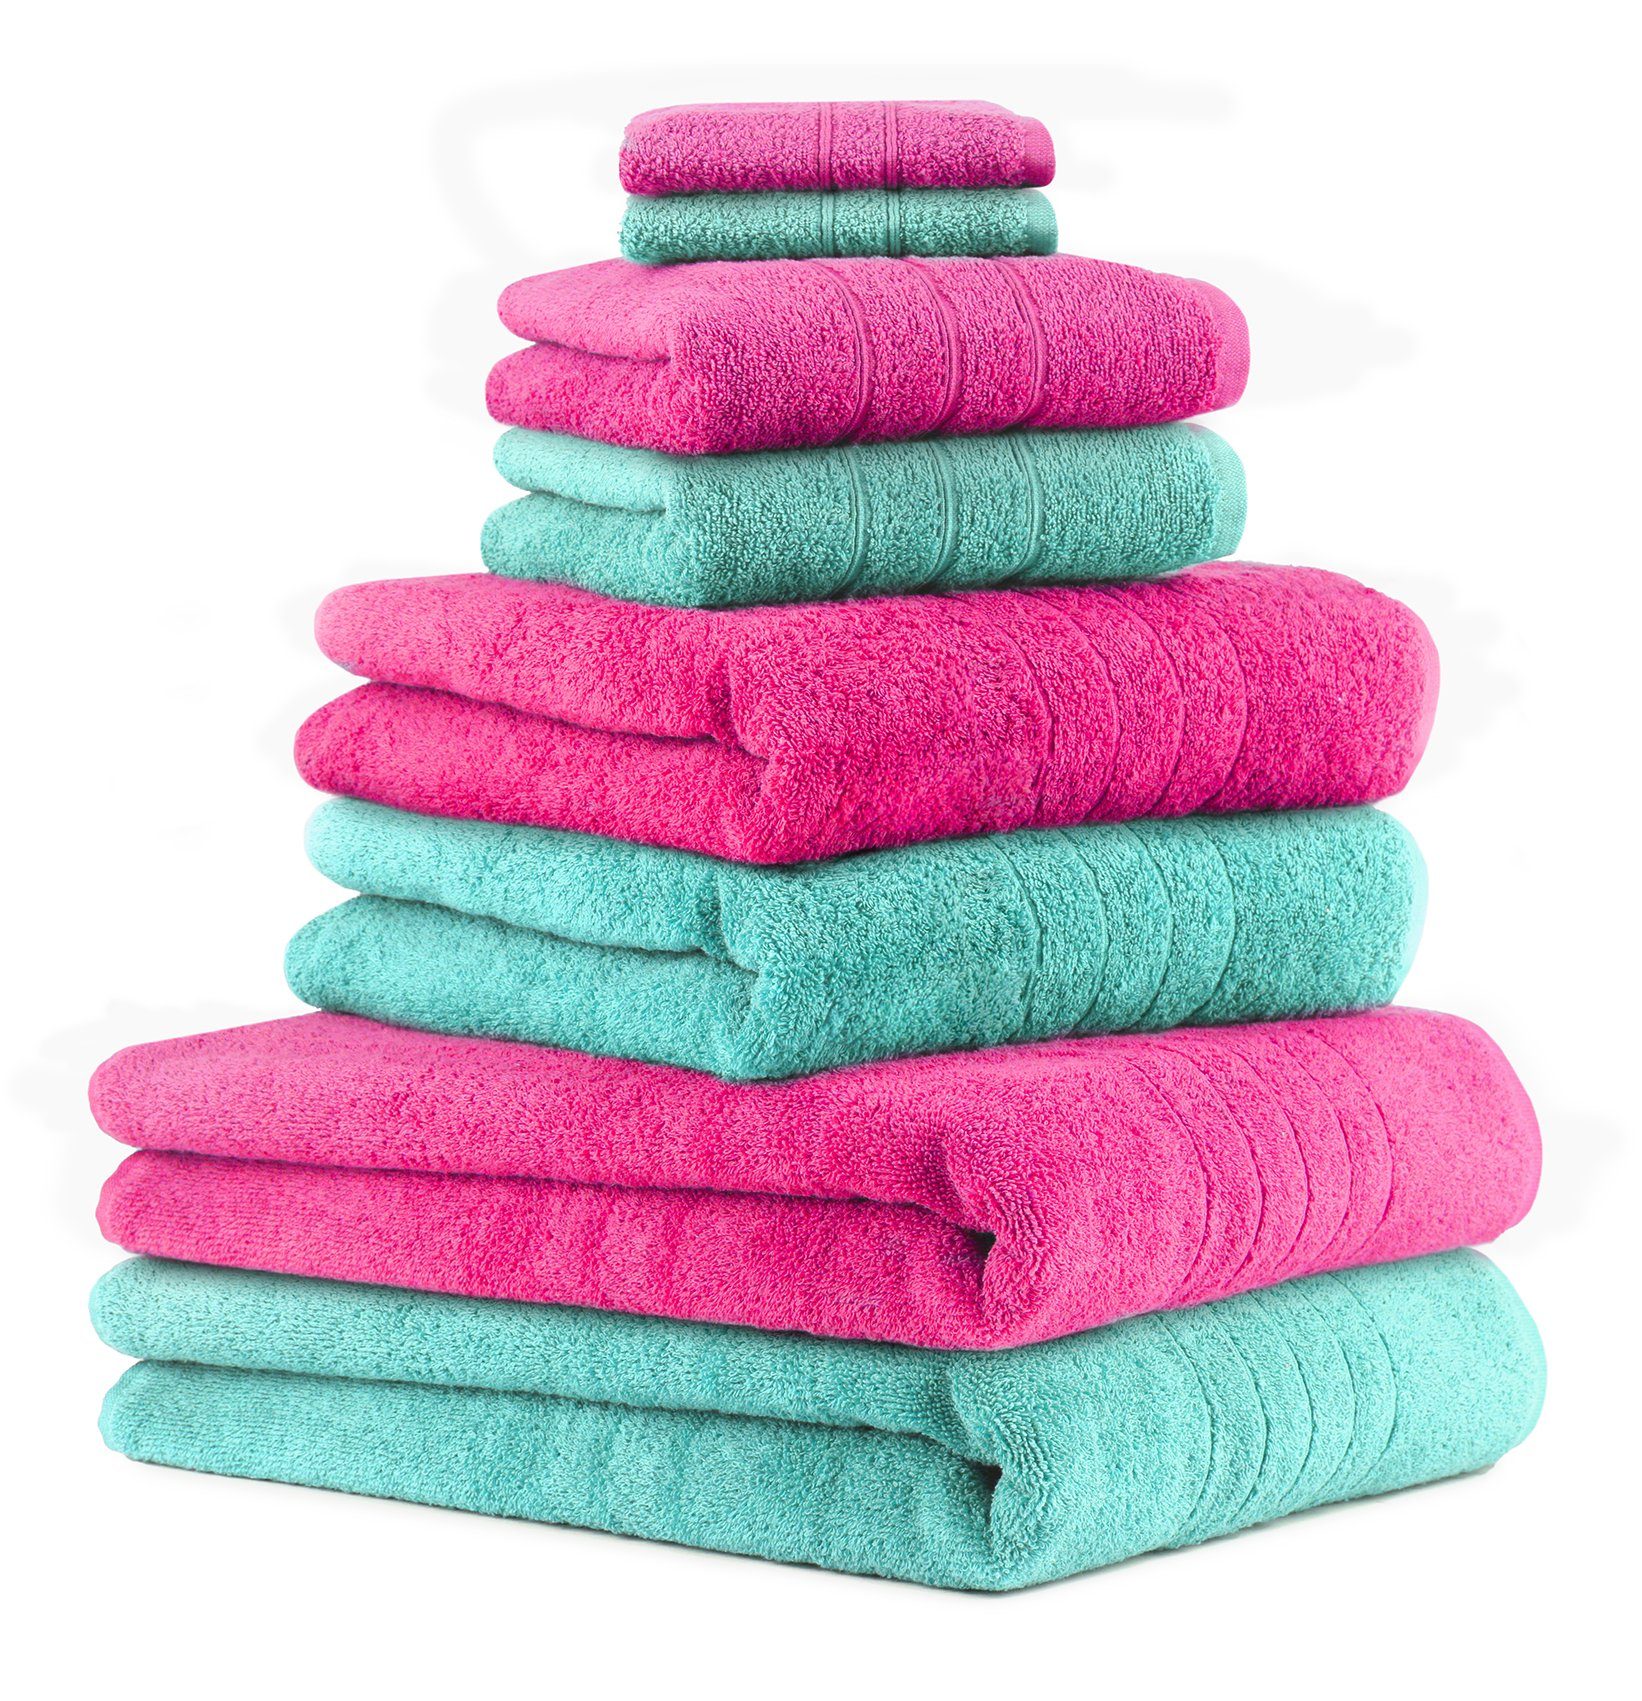 Betz Handtuch Set 8-TLG. Handtuch-Set Deluxe 100% Baumwolle 2 Badetücher 2 Duschtücher 2 Handtücher 2 Seiftücher Farbe Fuchsia und türkis, 100% Baumwolle, (8-tlg)